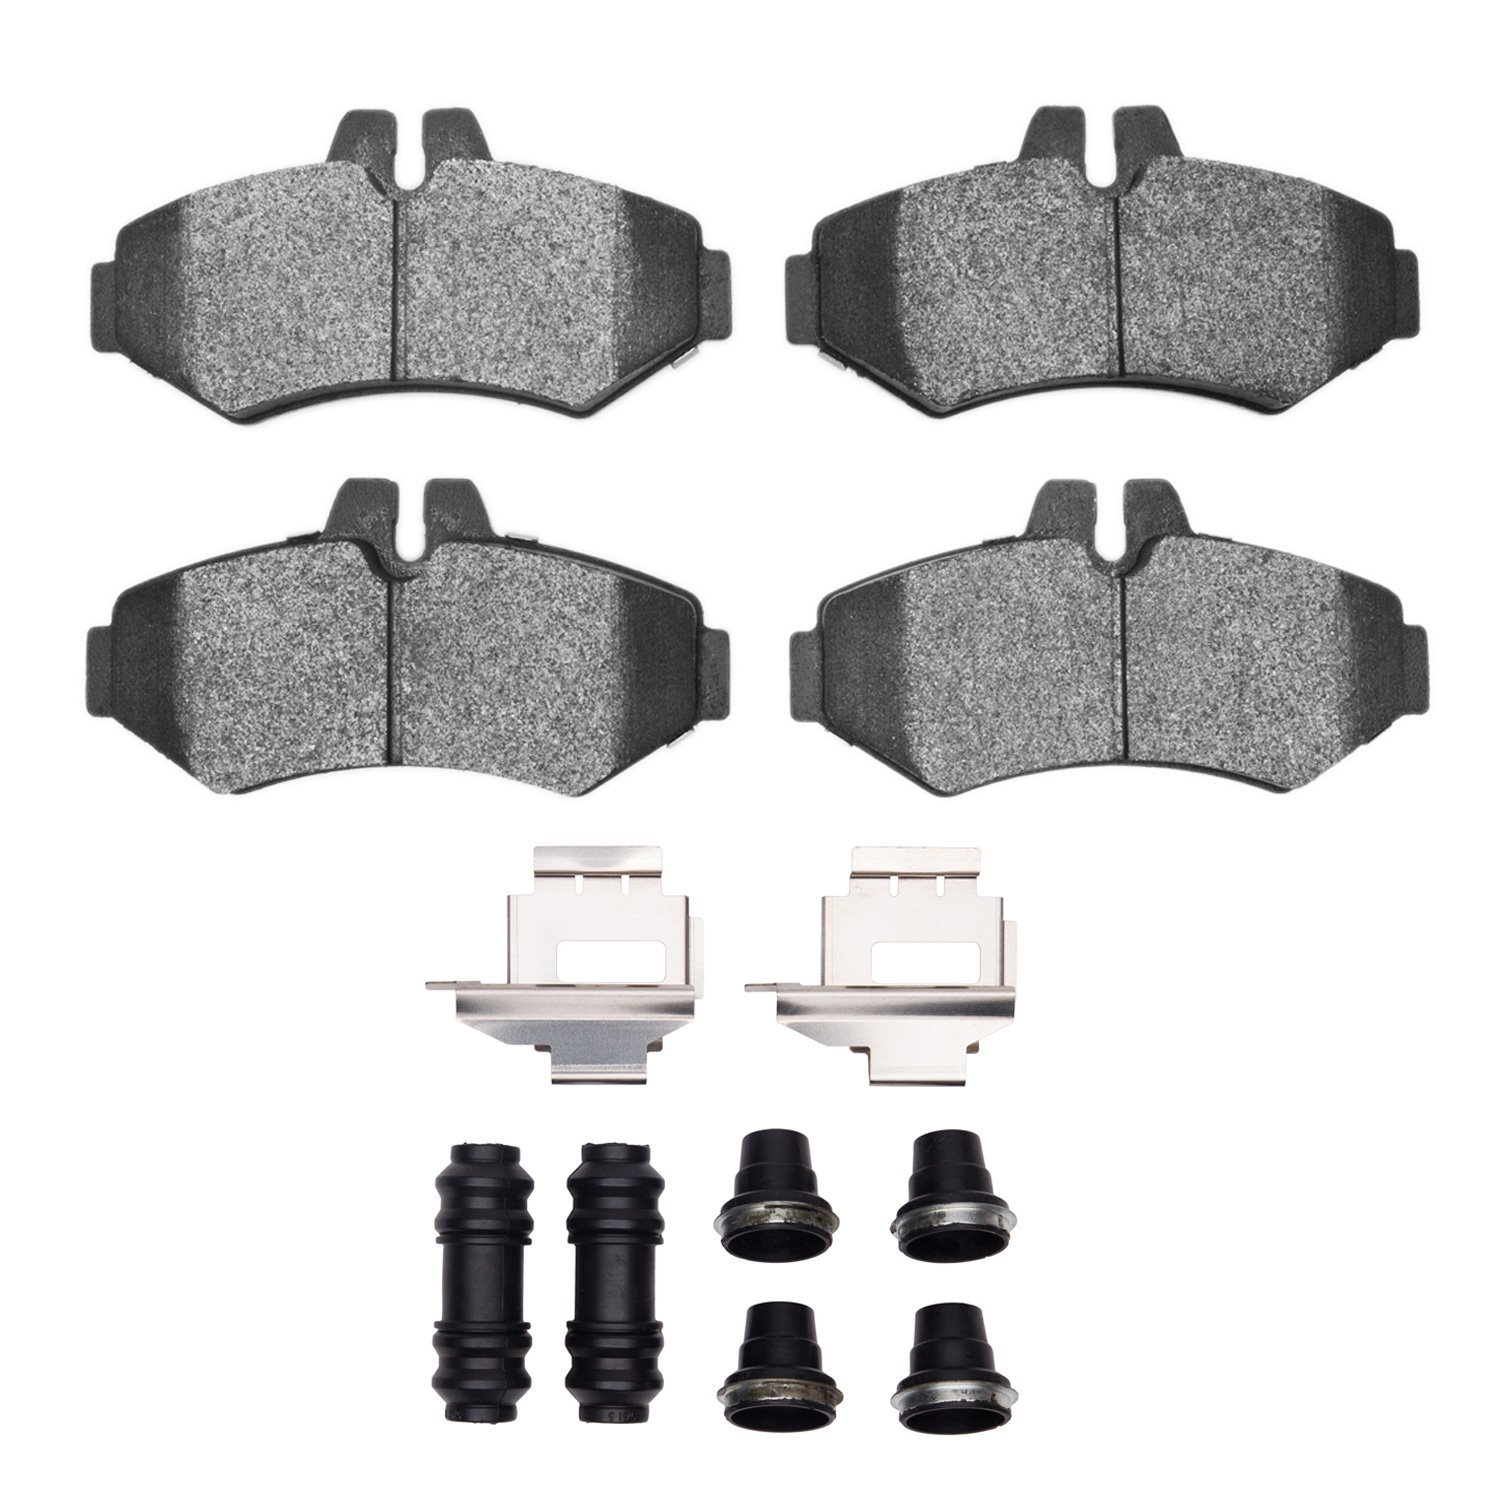 Semi-Metallic Brake Pads & Hardware Kit, 2002-2018 Fits Multiple Makes/Models, Position: Rear Right